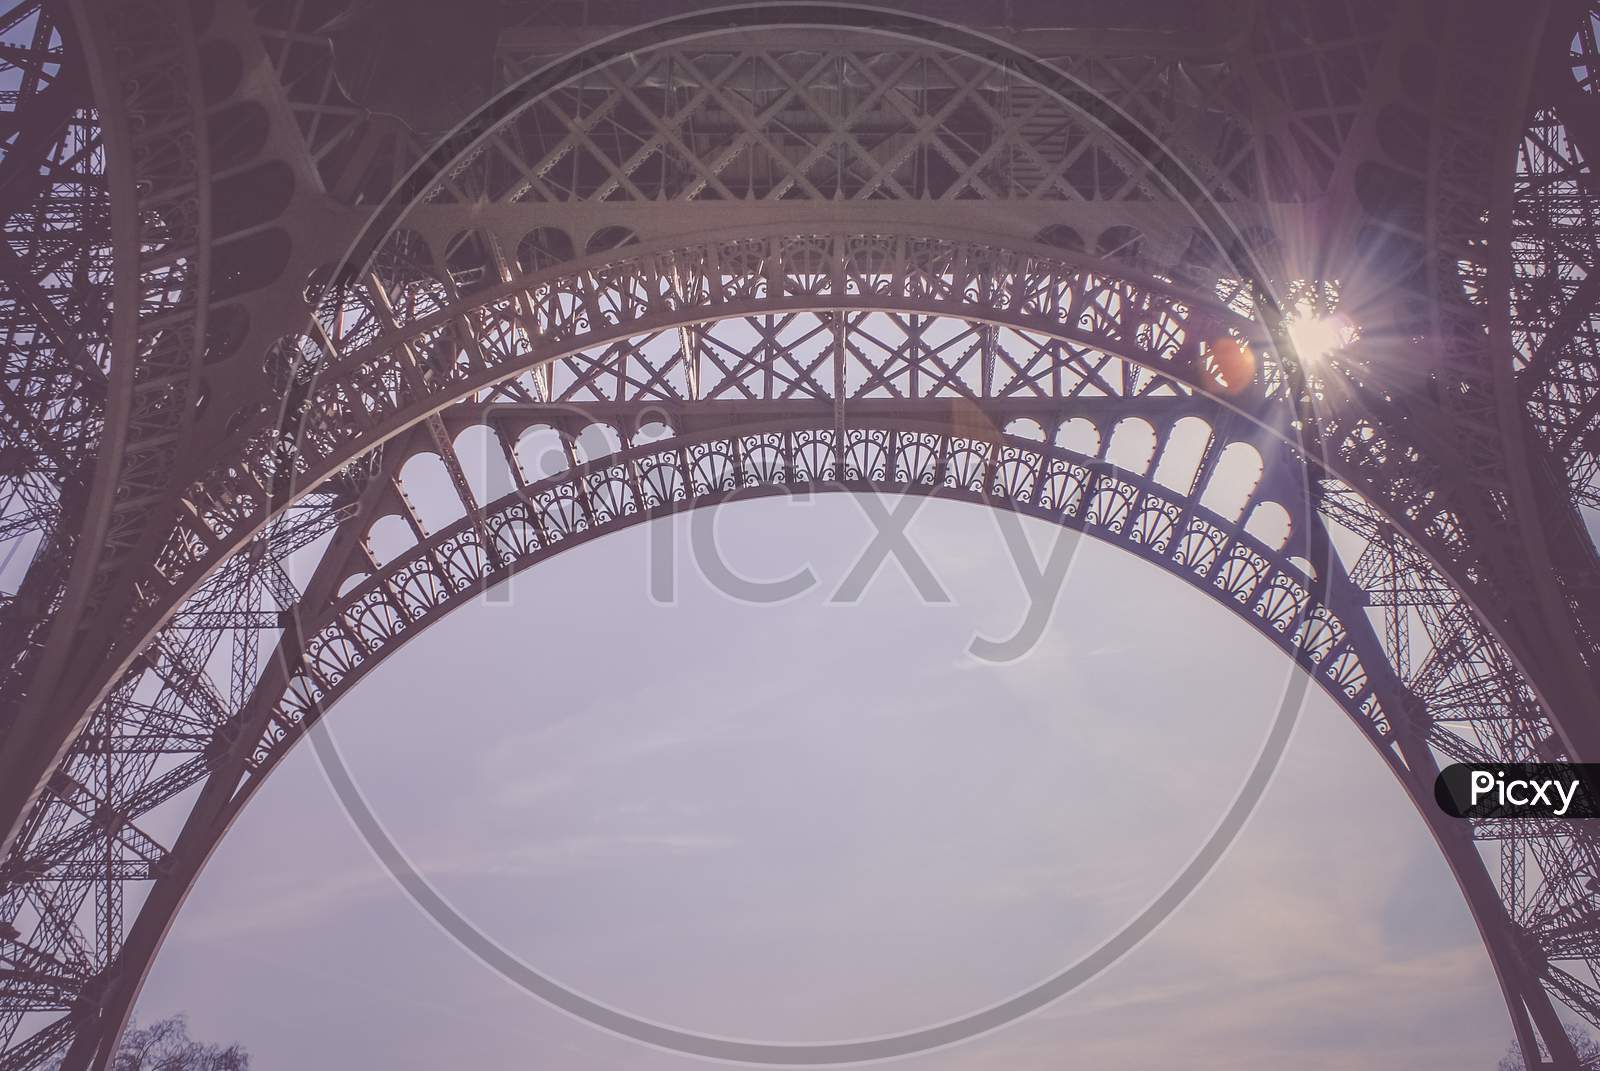 The Eiffel Tower And Blue Sky (Paris, France)